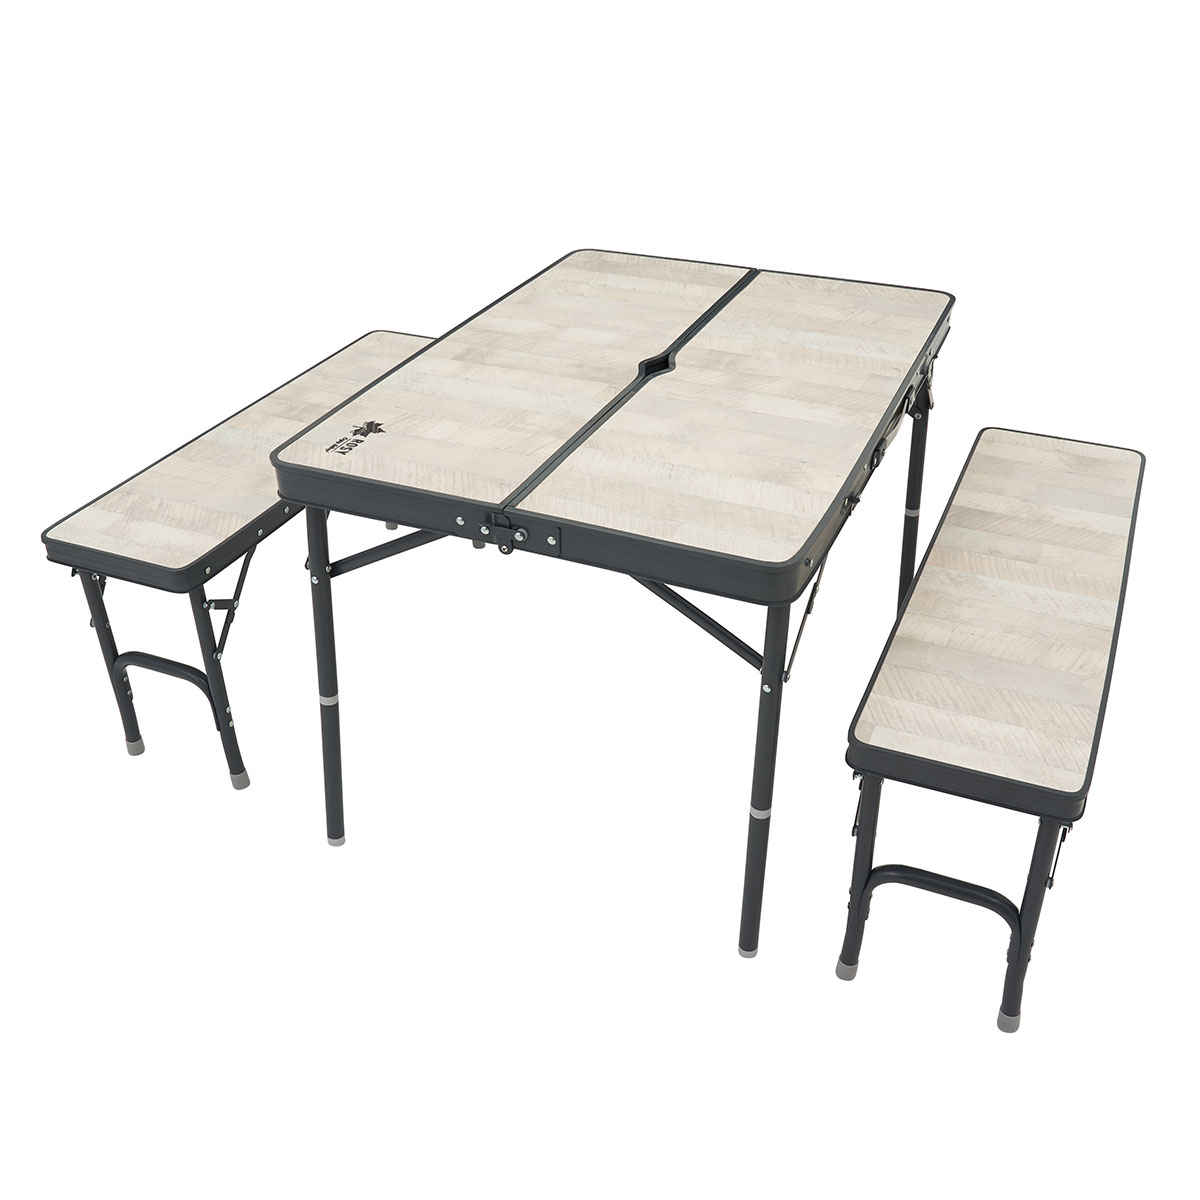 ROSY ベンチテーブルセット4|ギア|家具|セット|製品情報|ロゴス 